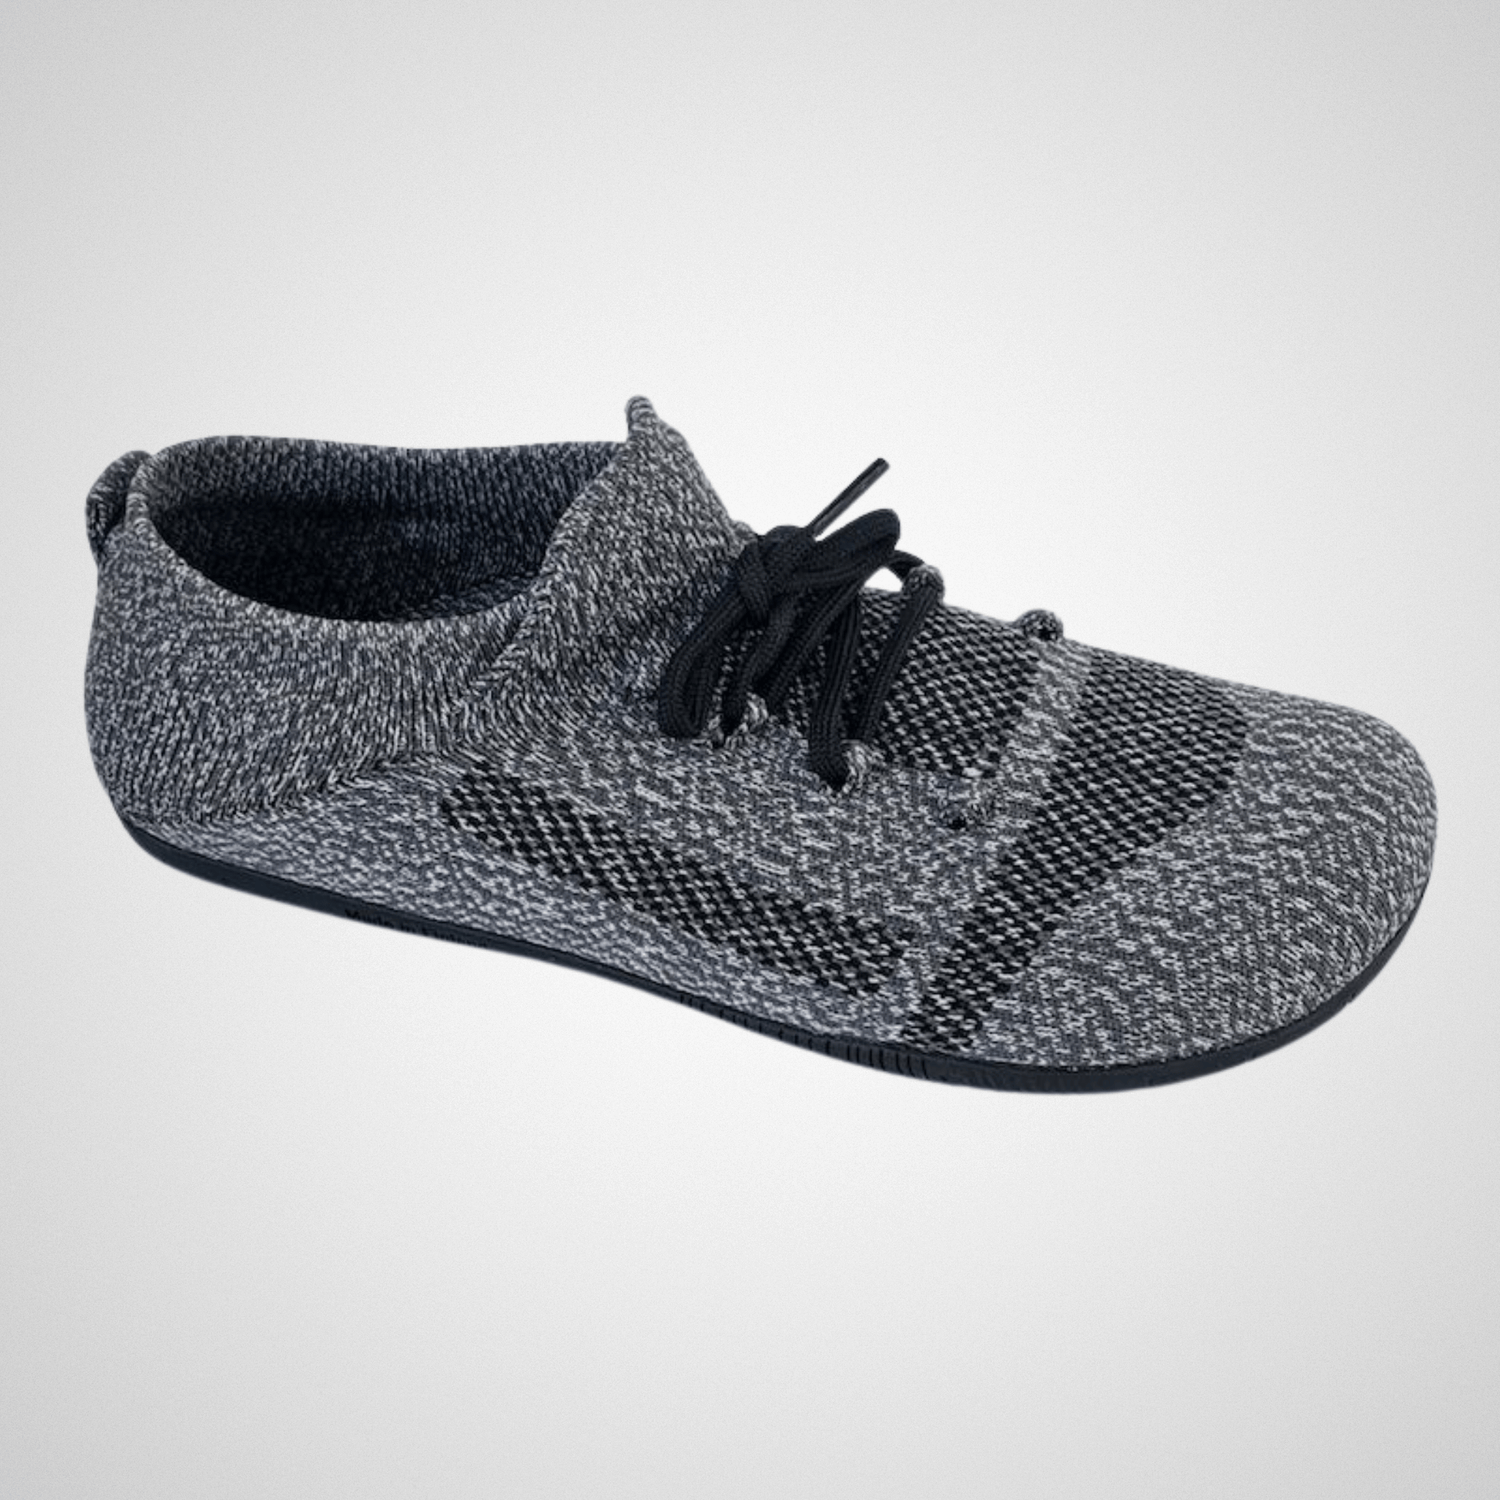 Feelmax - Ounas 2 barefoot shoes - Charcoal